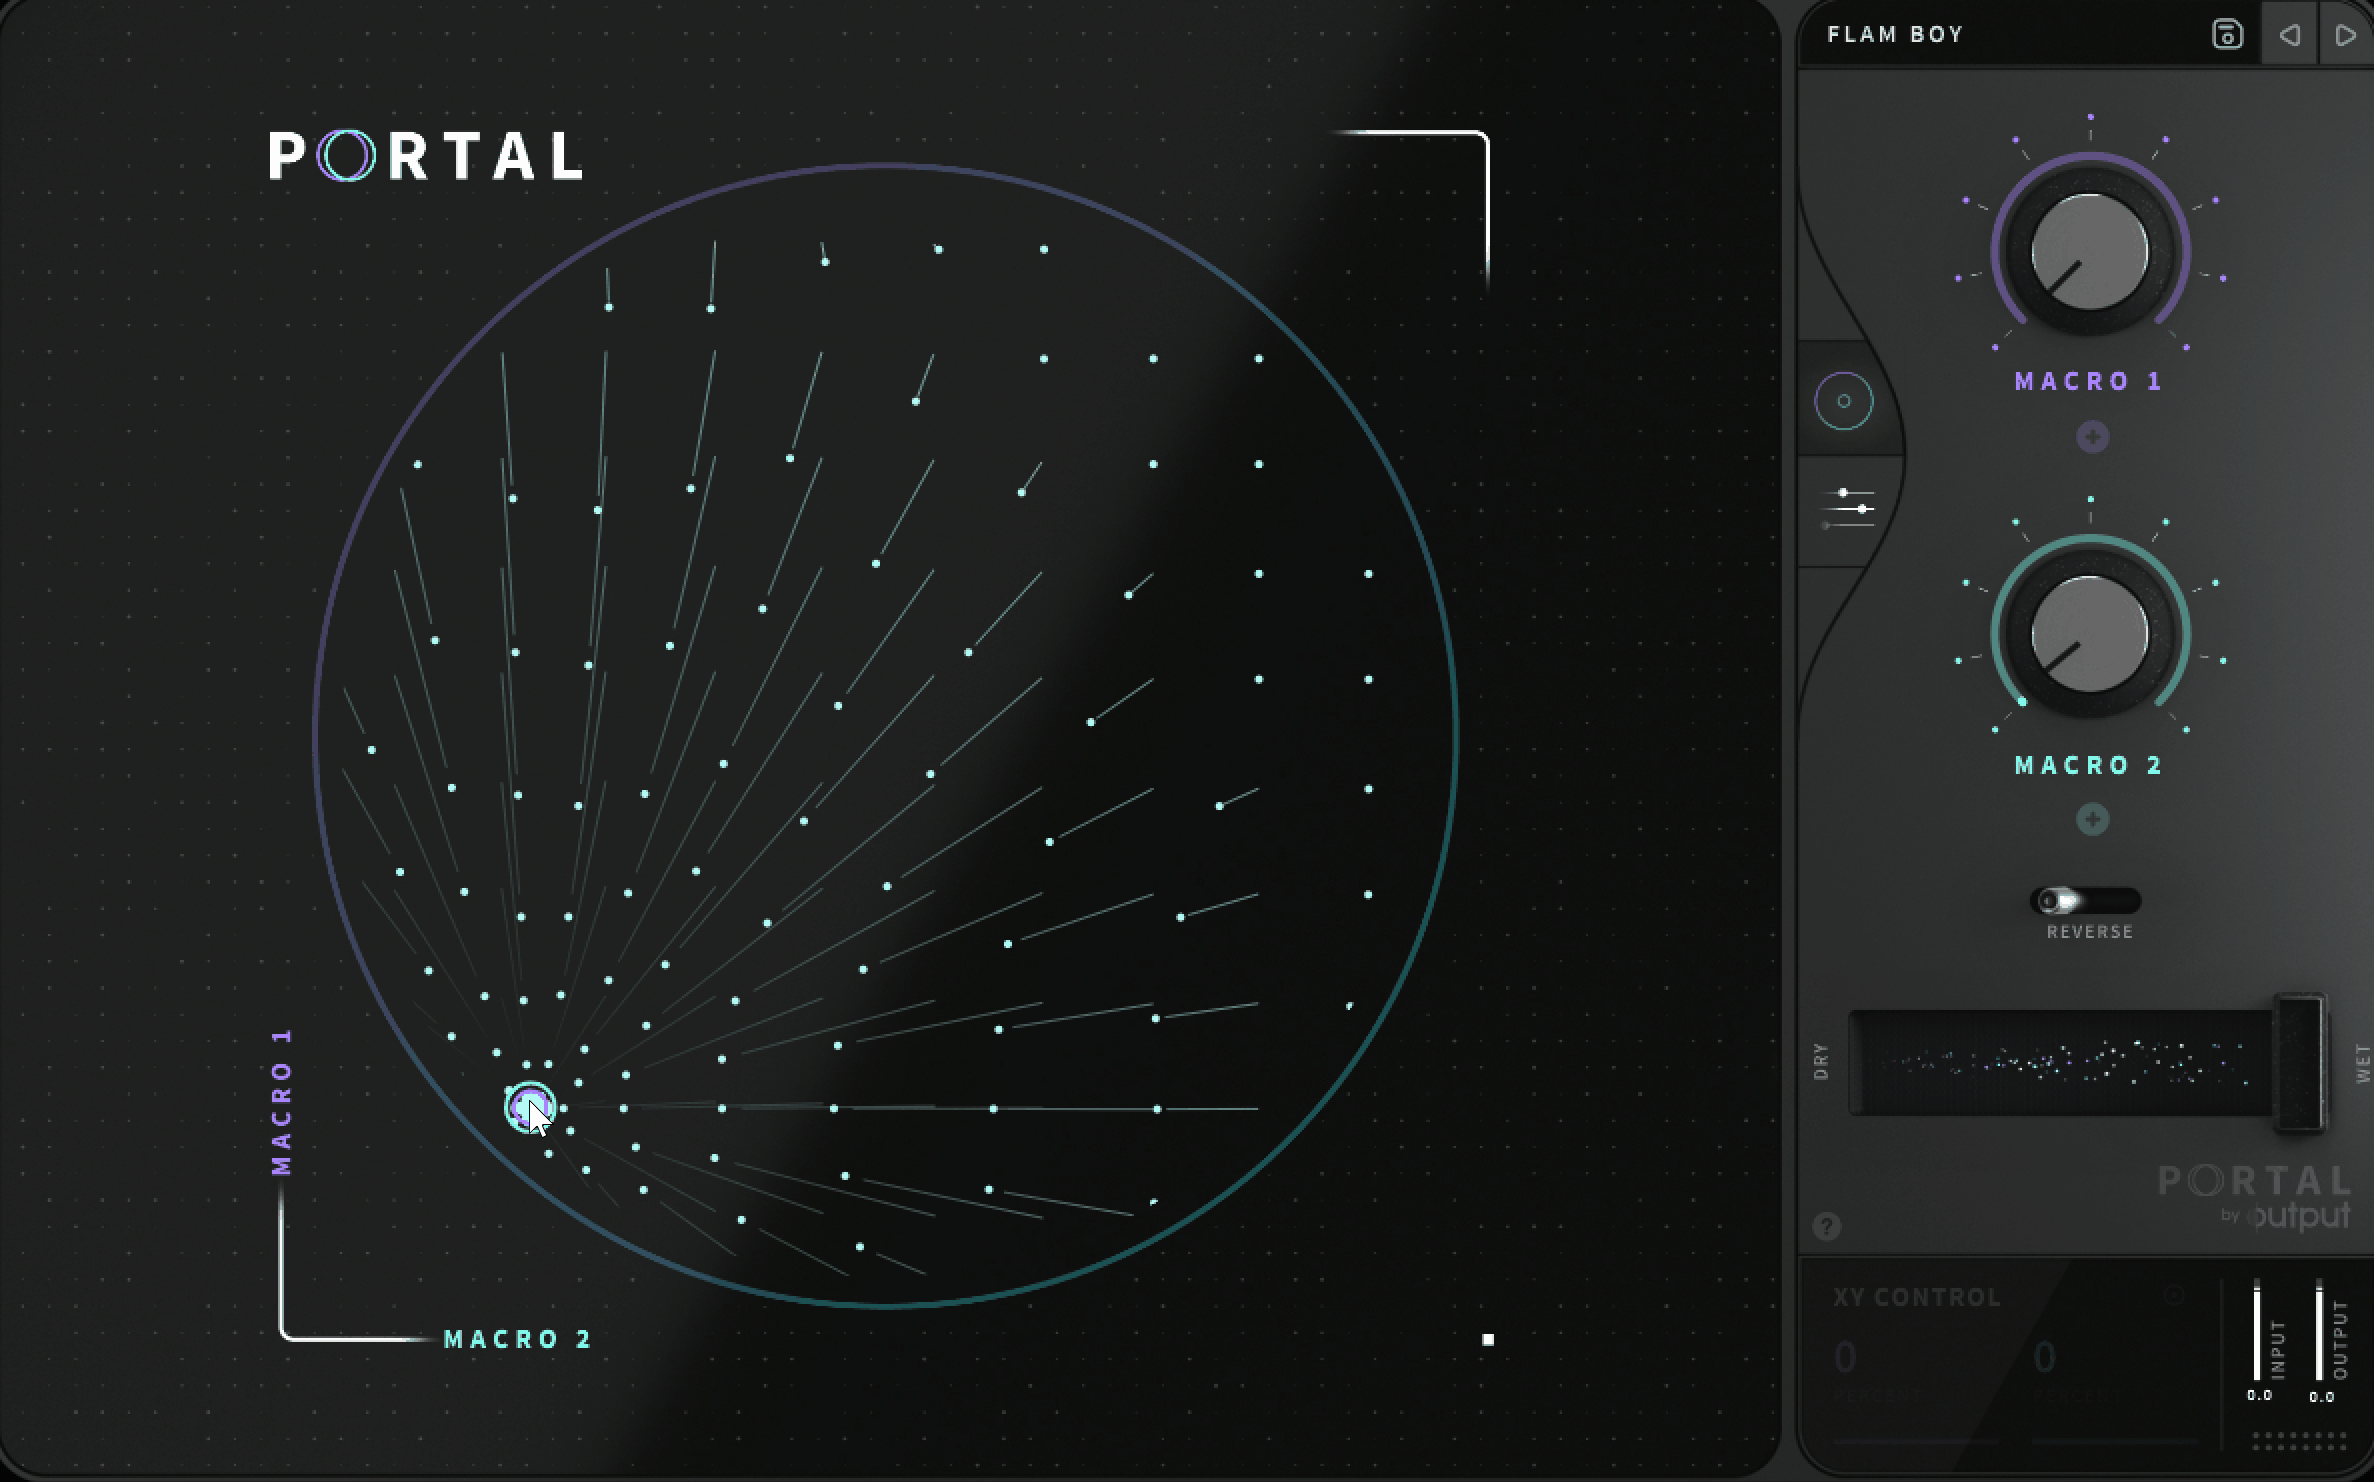 Portal XY control